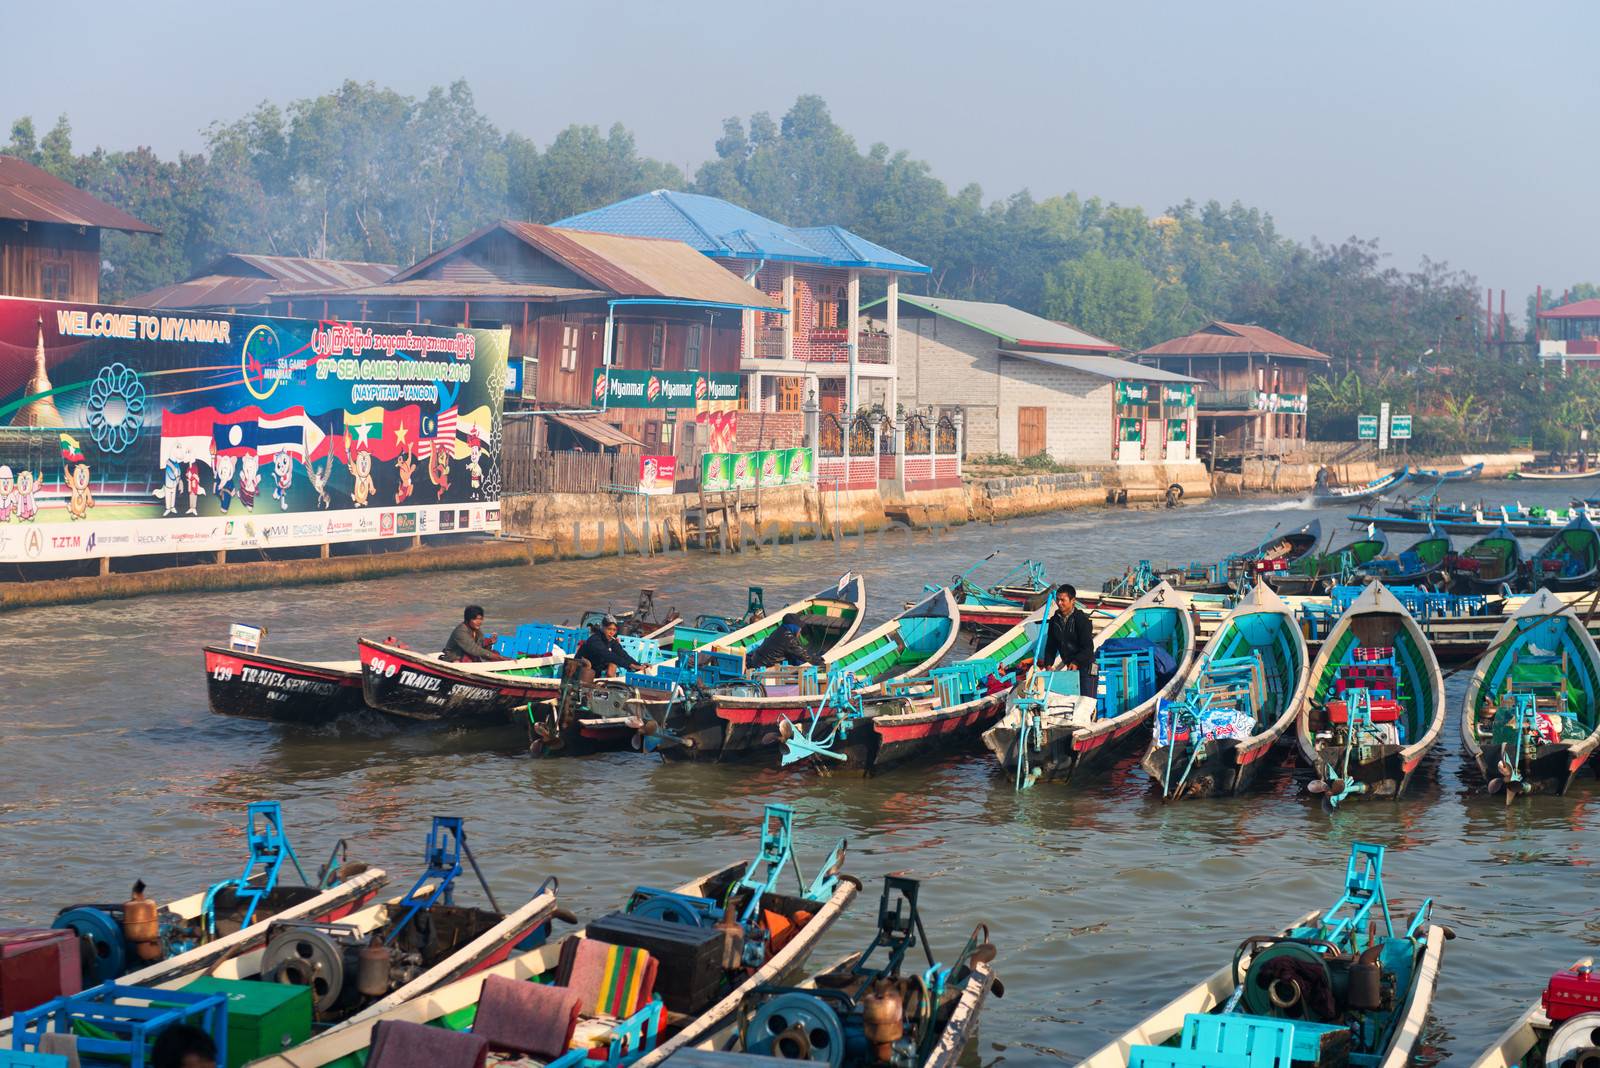 Wooden tourist boats on Inle lake, Myanmar (Burma) by iryna_rasko